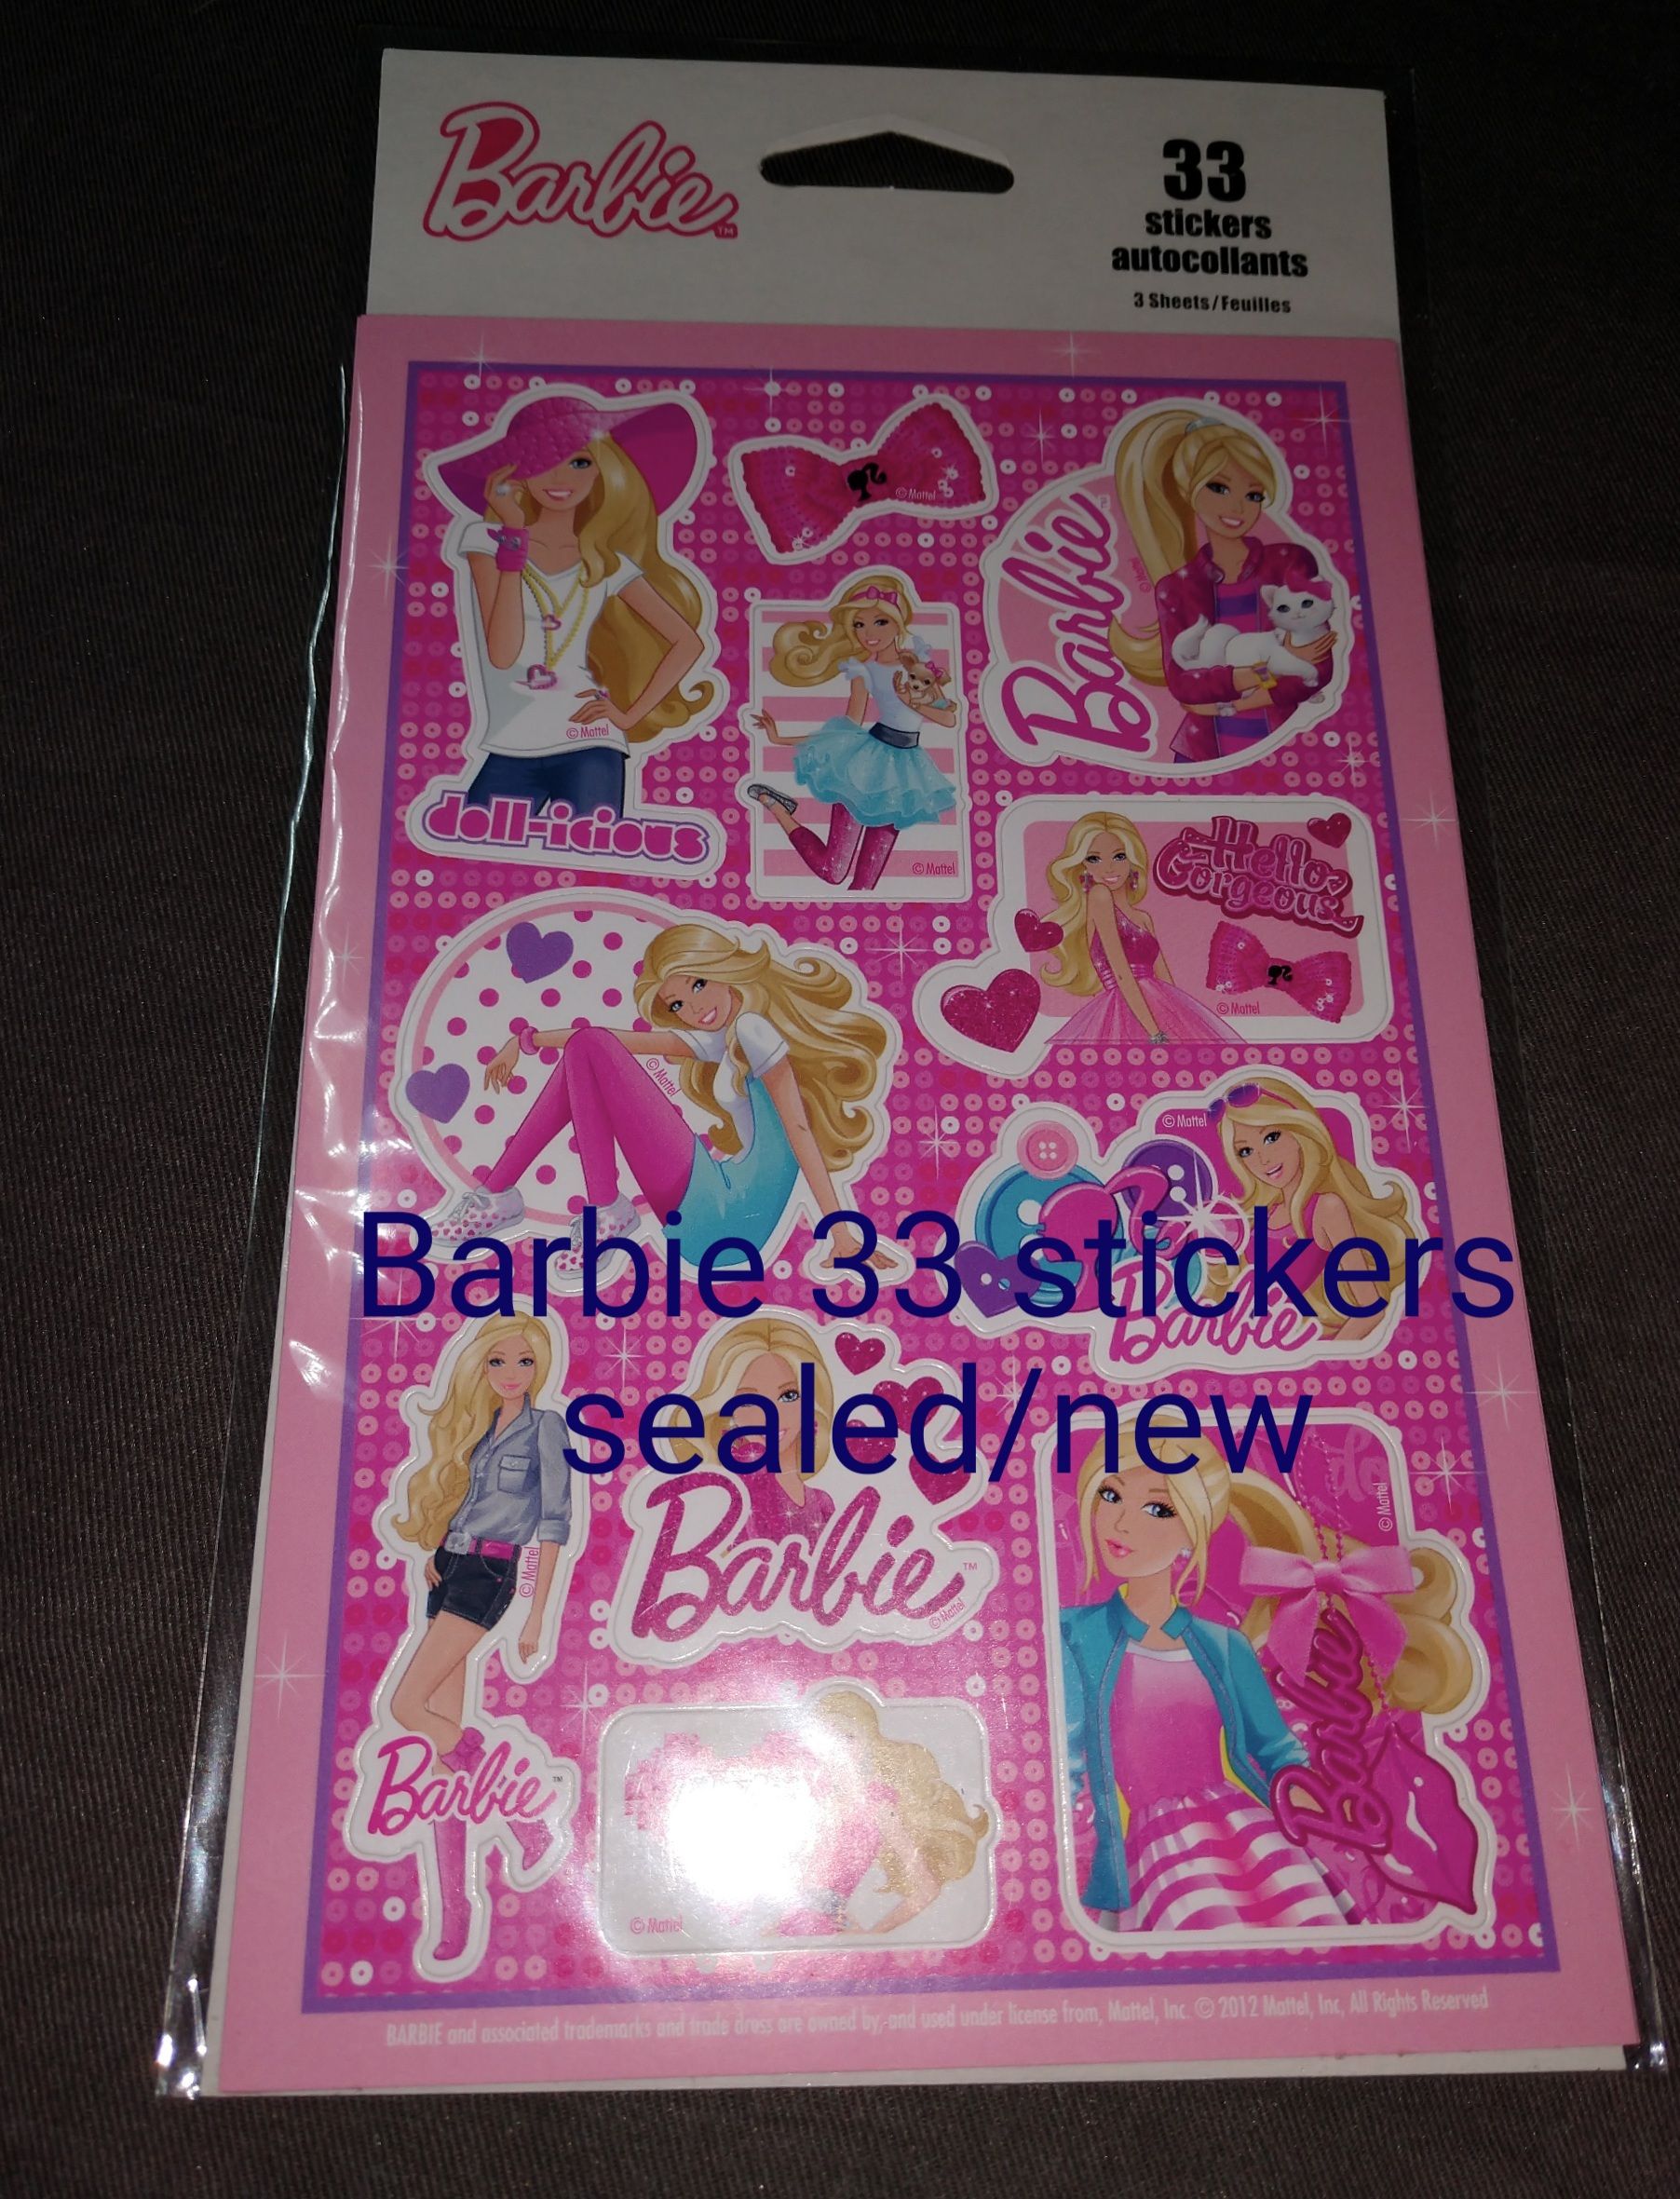 Barbie stickers (33) new sealed